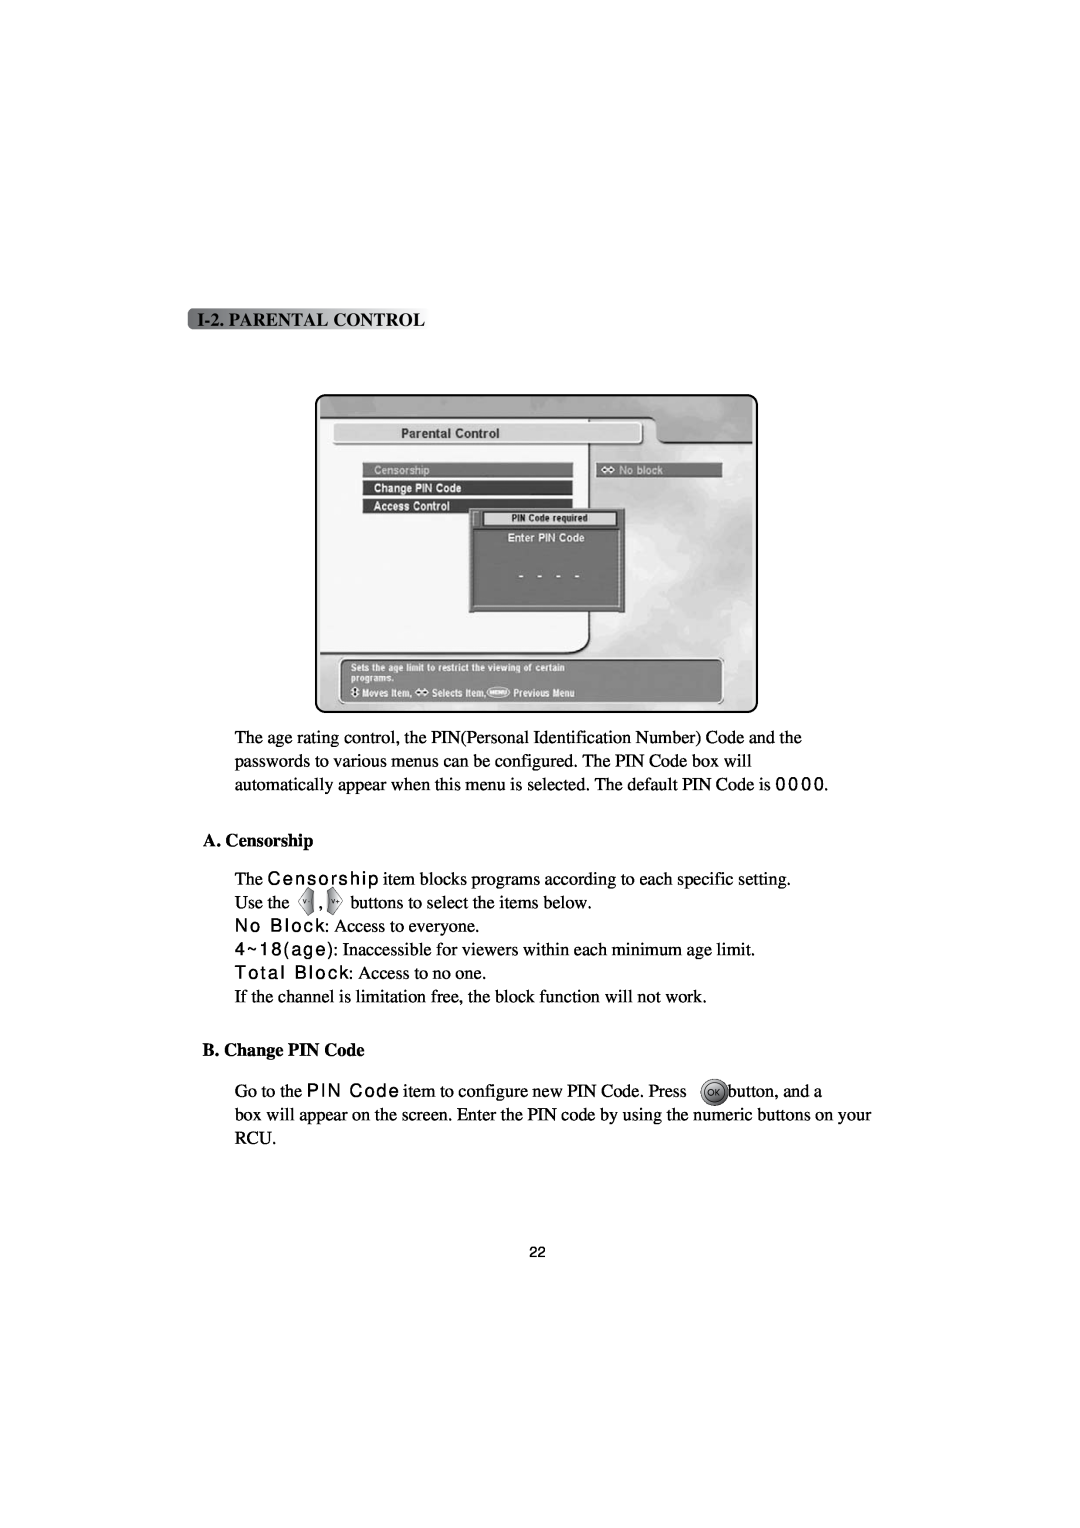 Topfield TF4000PVR CoCI manual I-2. PARENTAL CONTROL, A. Censorship, B. Change PIN Code 